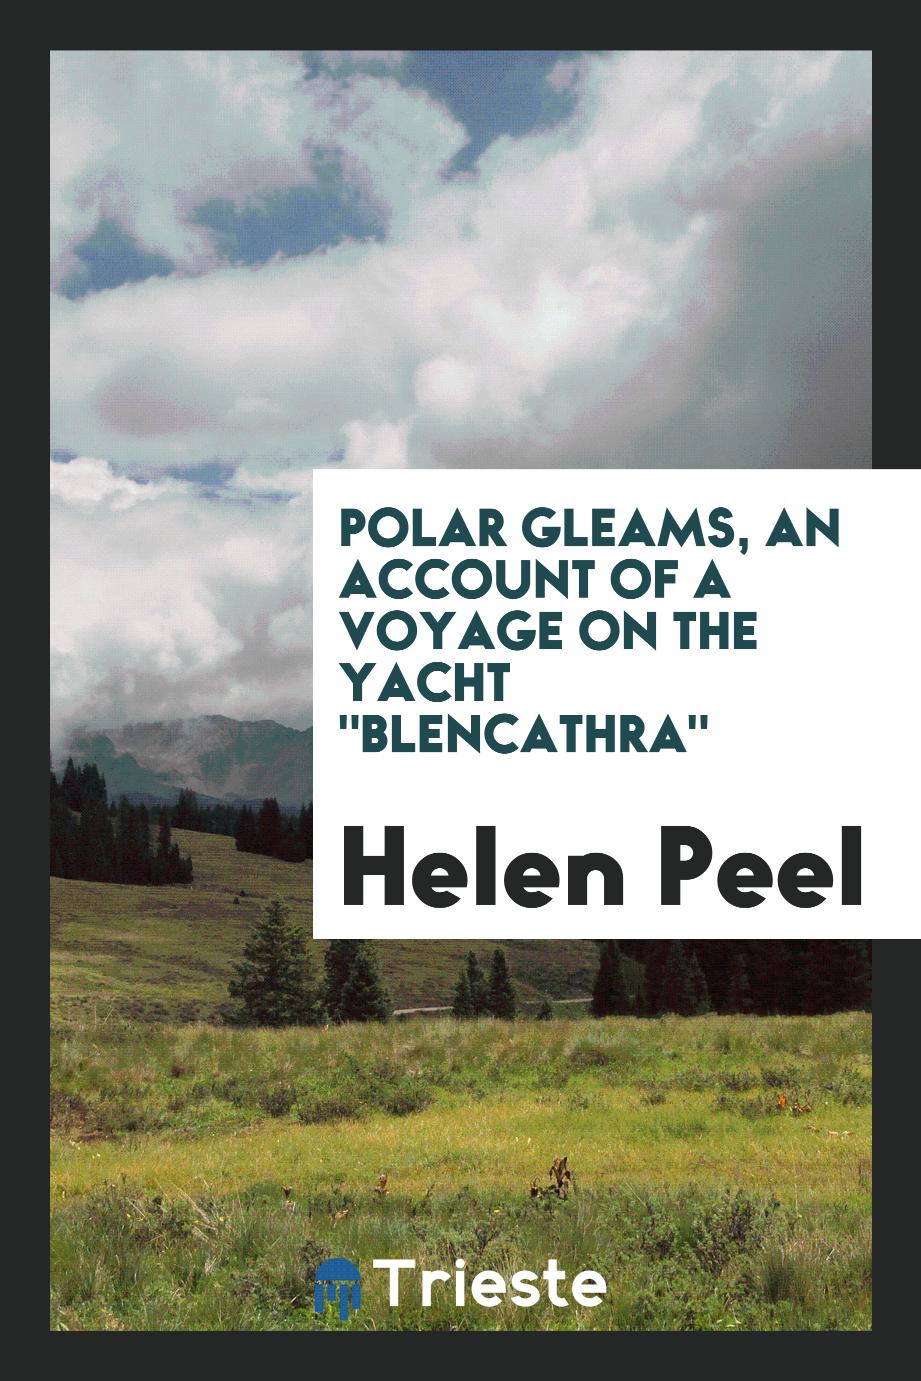 Polar gleams, an account of a voyage on the yacht "Blencathra"